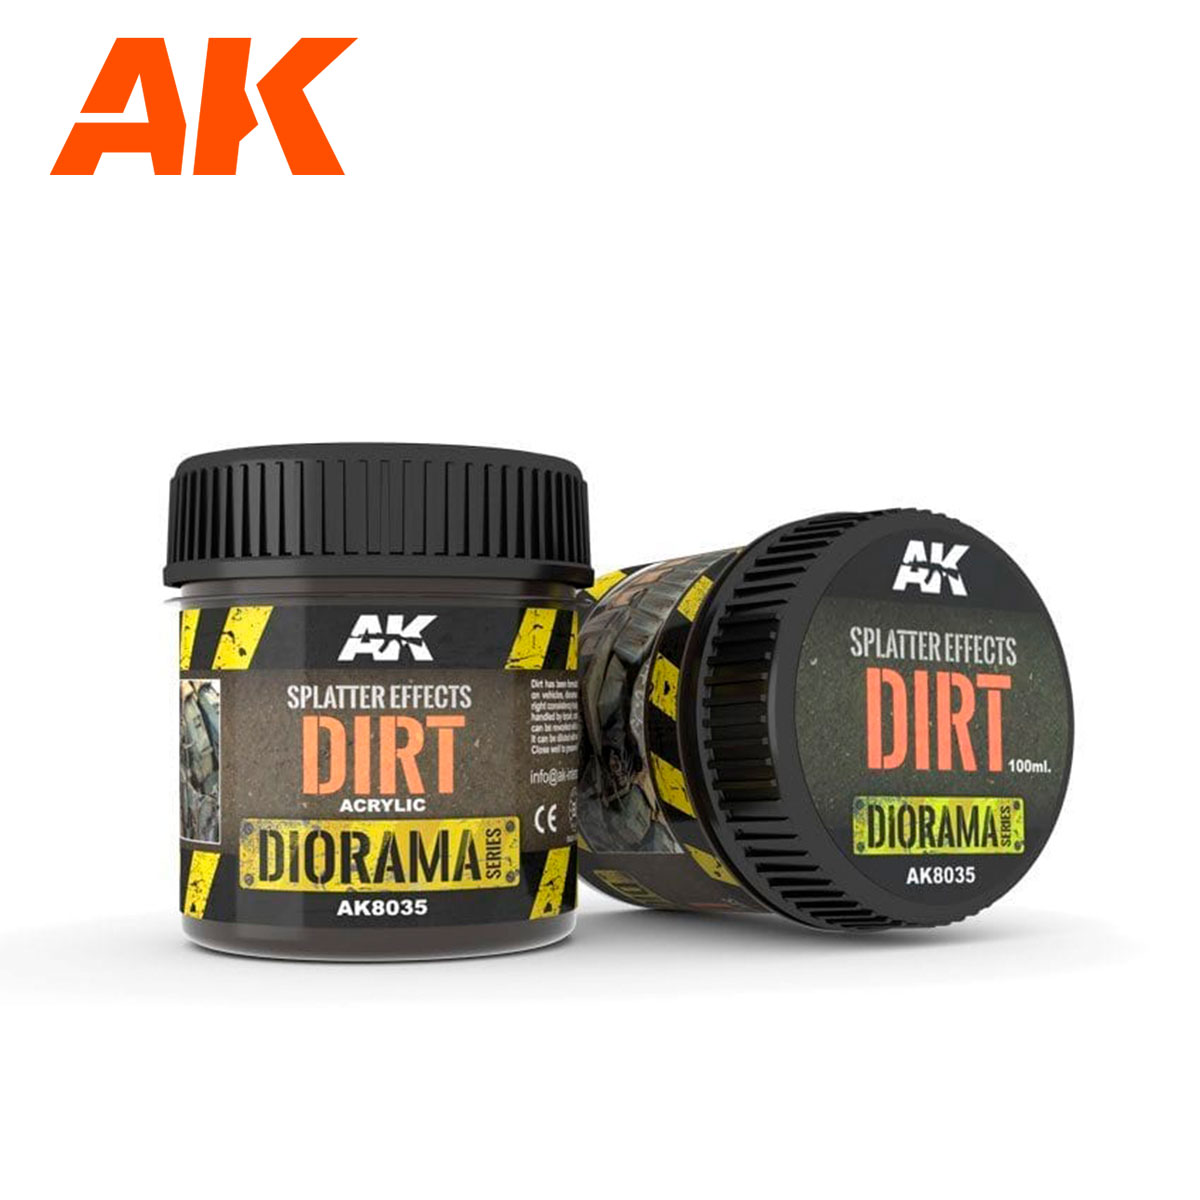 AK8035 Splatter Effects Dirt (Acrylic) (100mL)